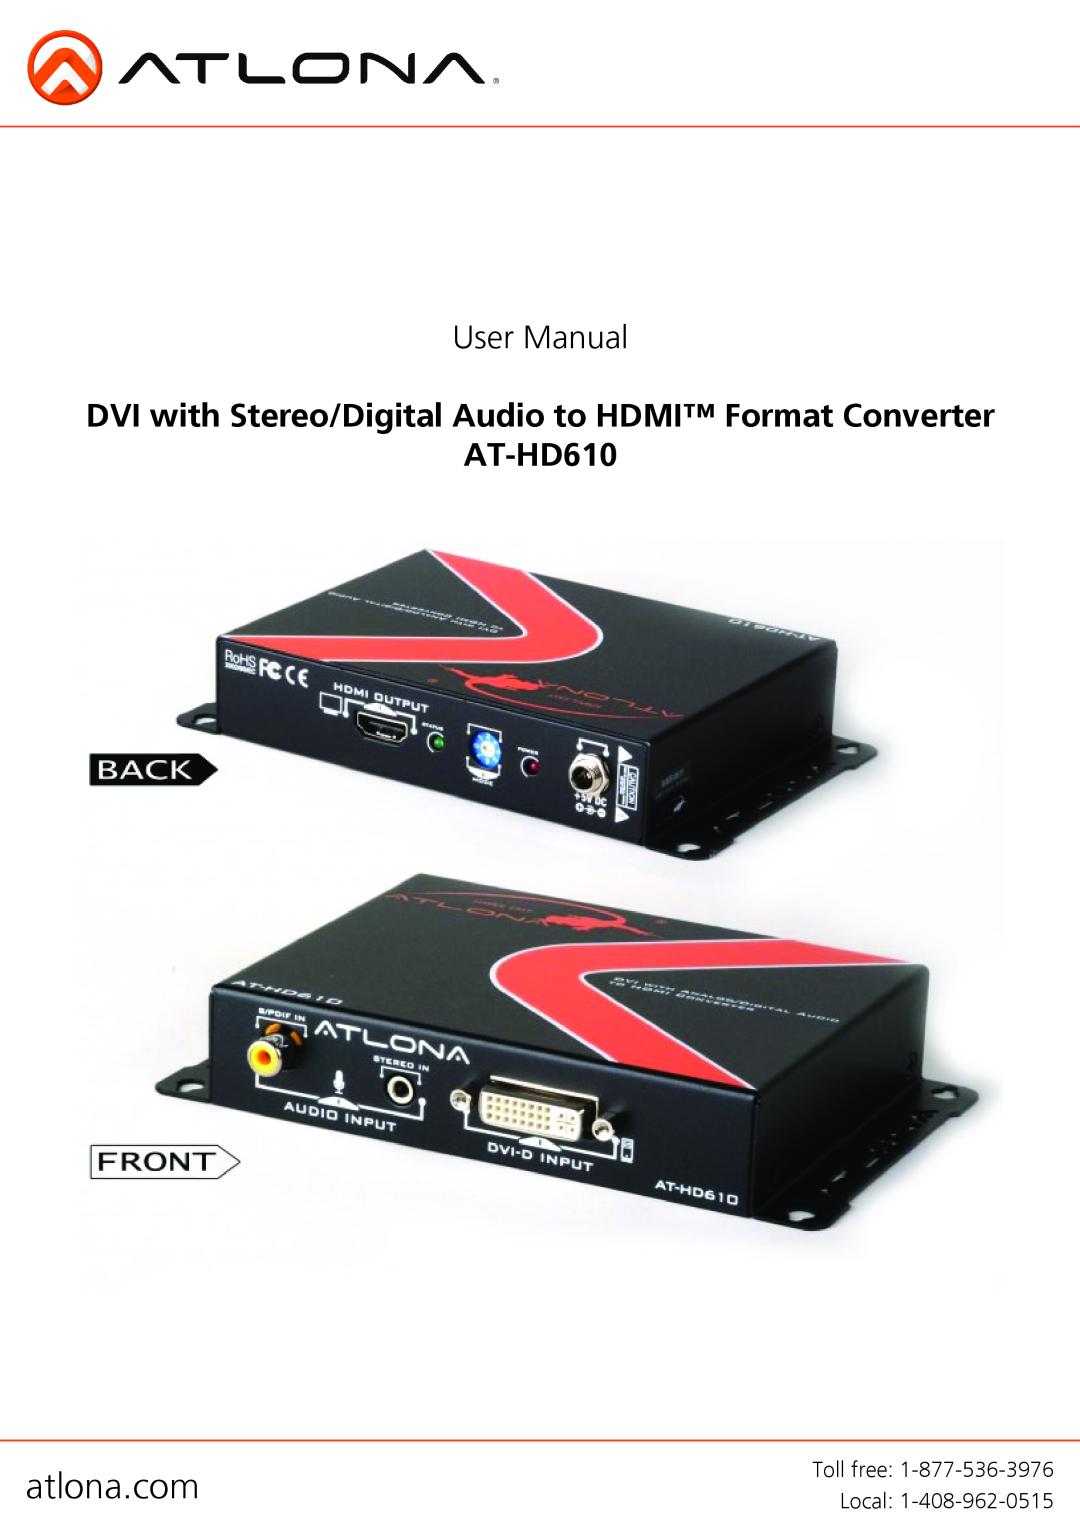 Atlona user manual atlona.com, User Manual, DVI with Stereo/Digital Audio to HDMI Format Converter AT-HD610 